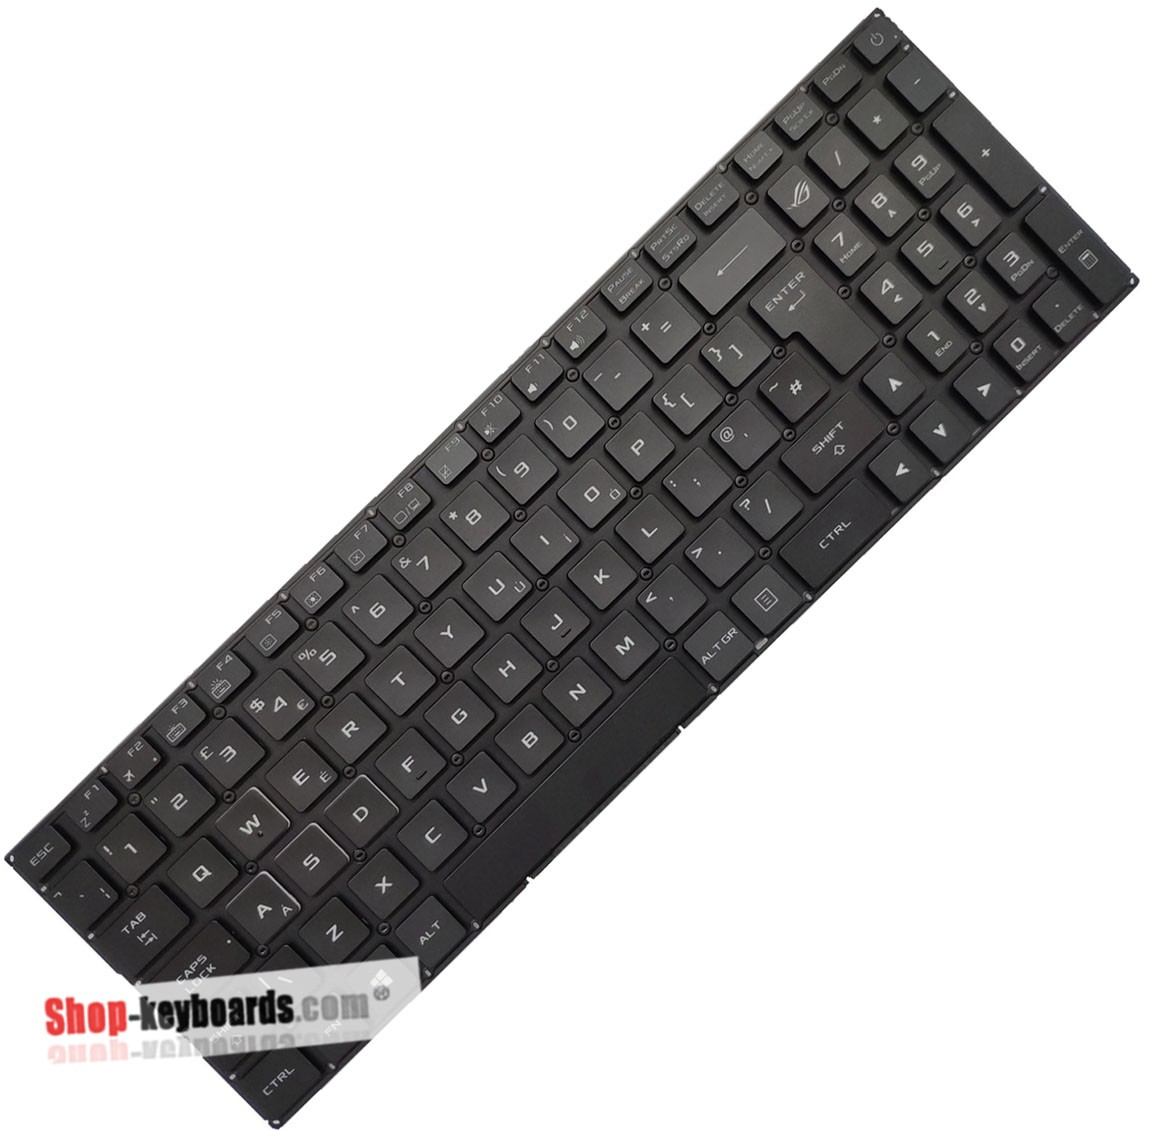 Asus 0KNB0-6618BG00  Keyboard replacement